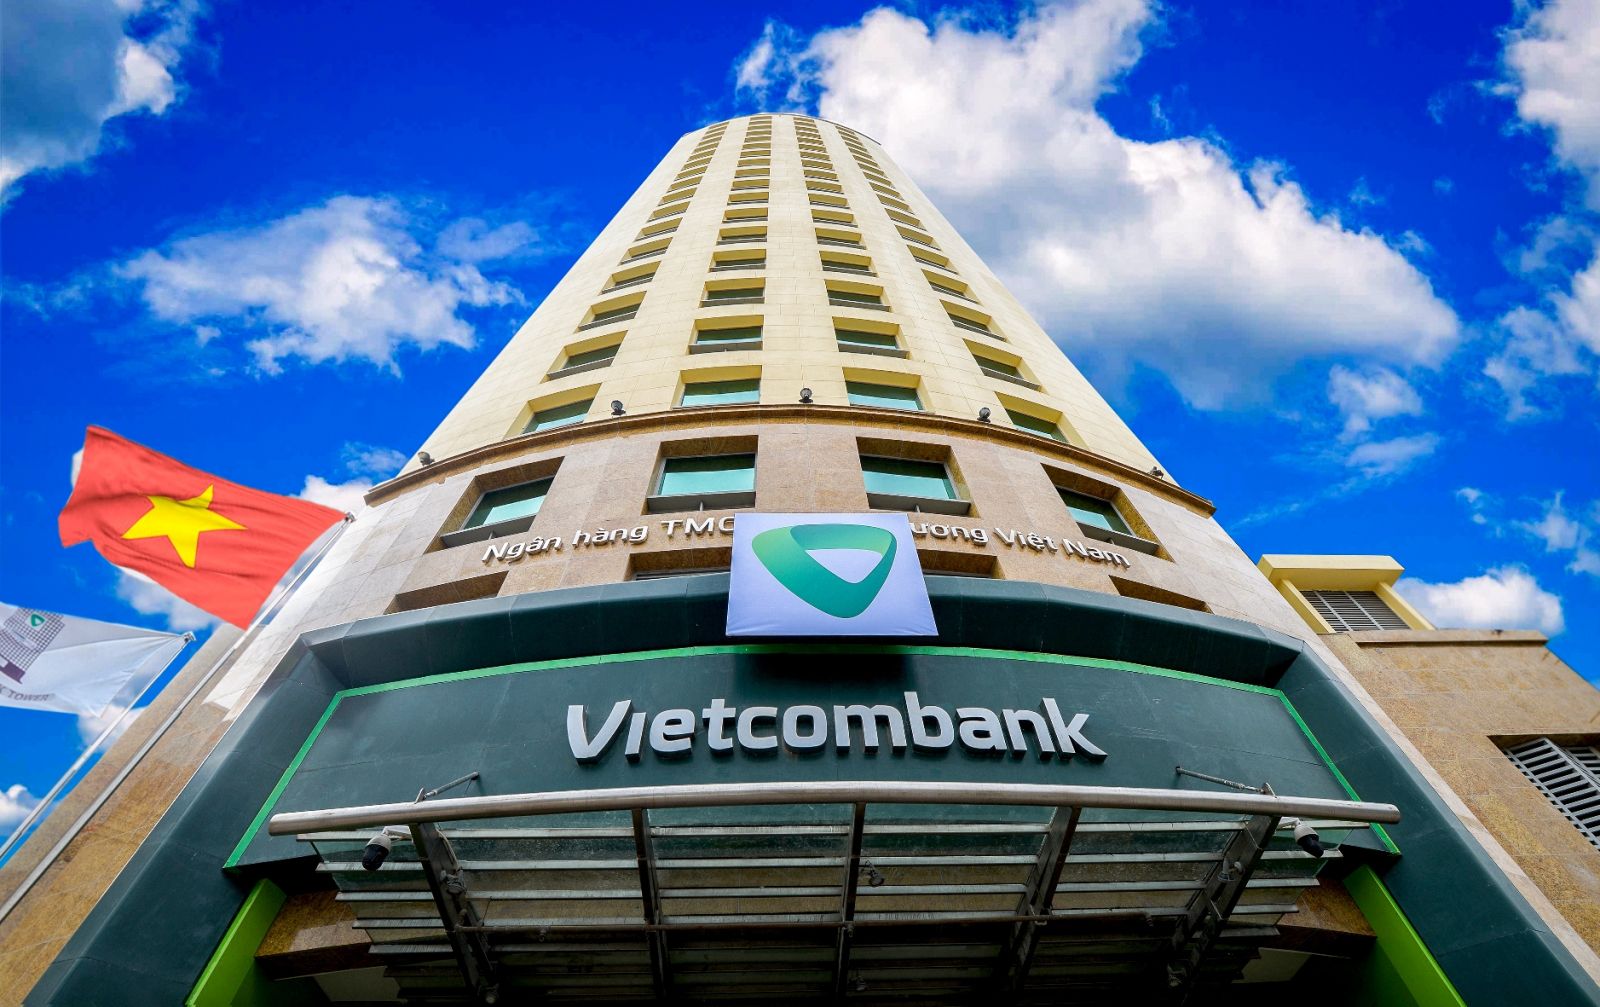 Vietcombank